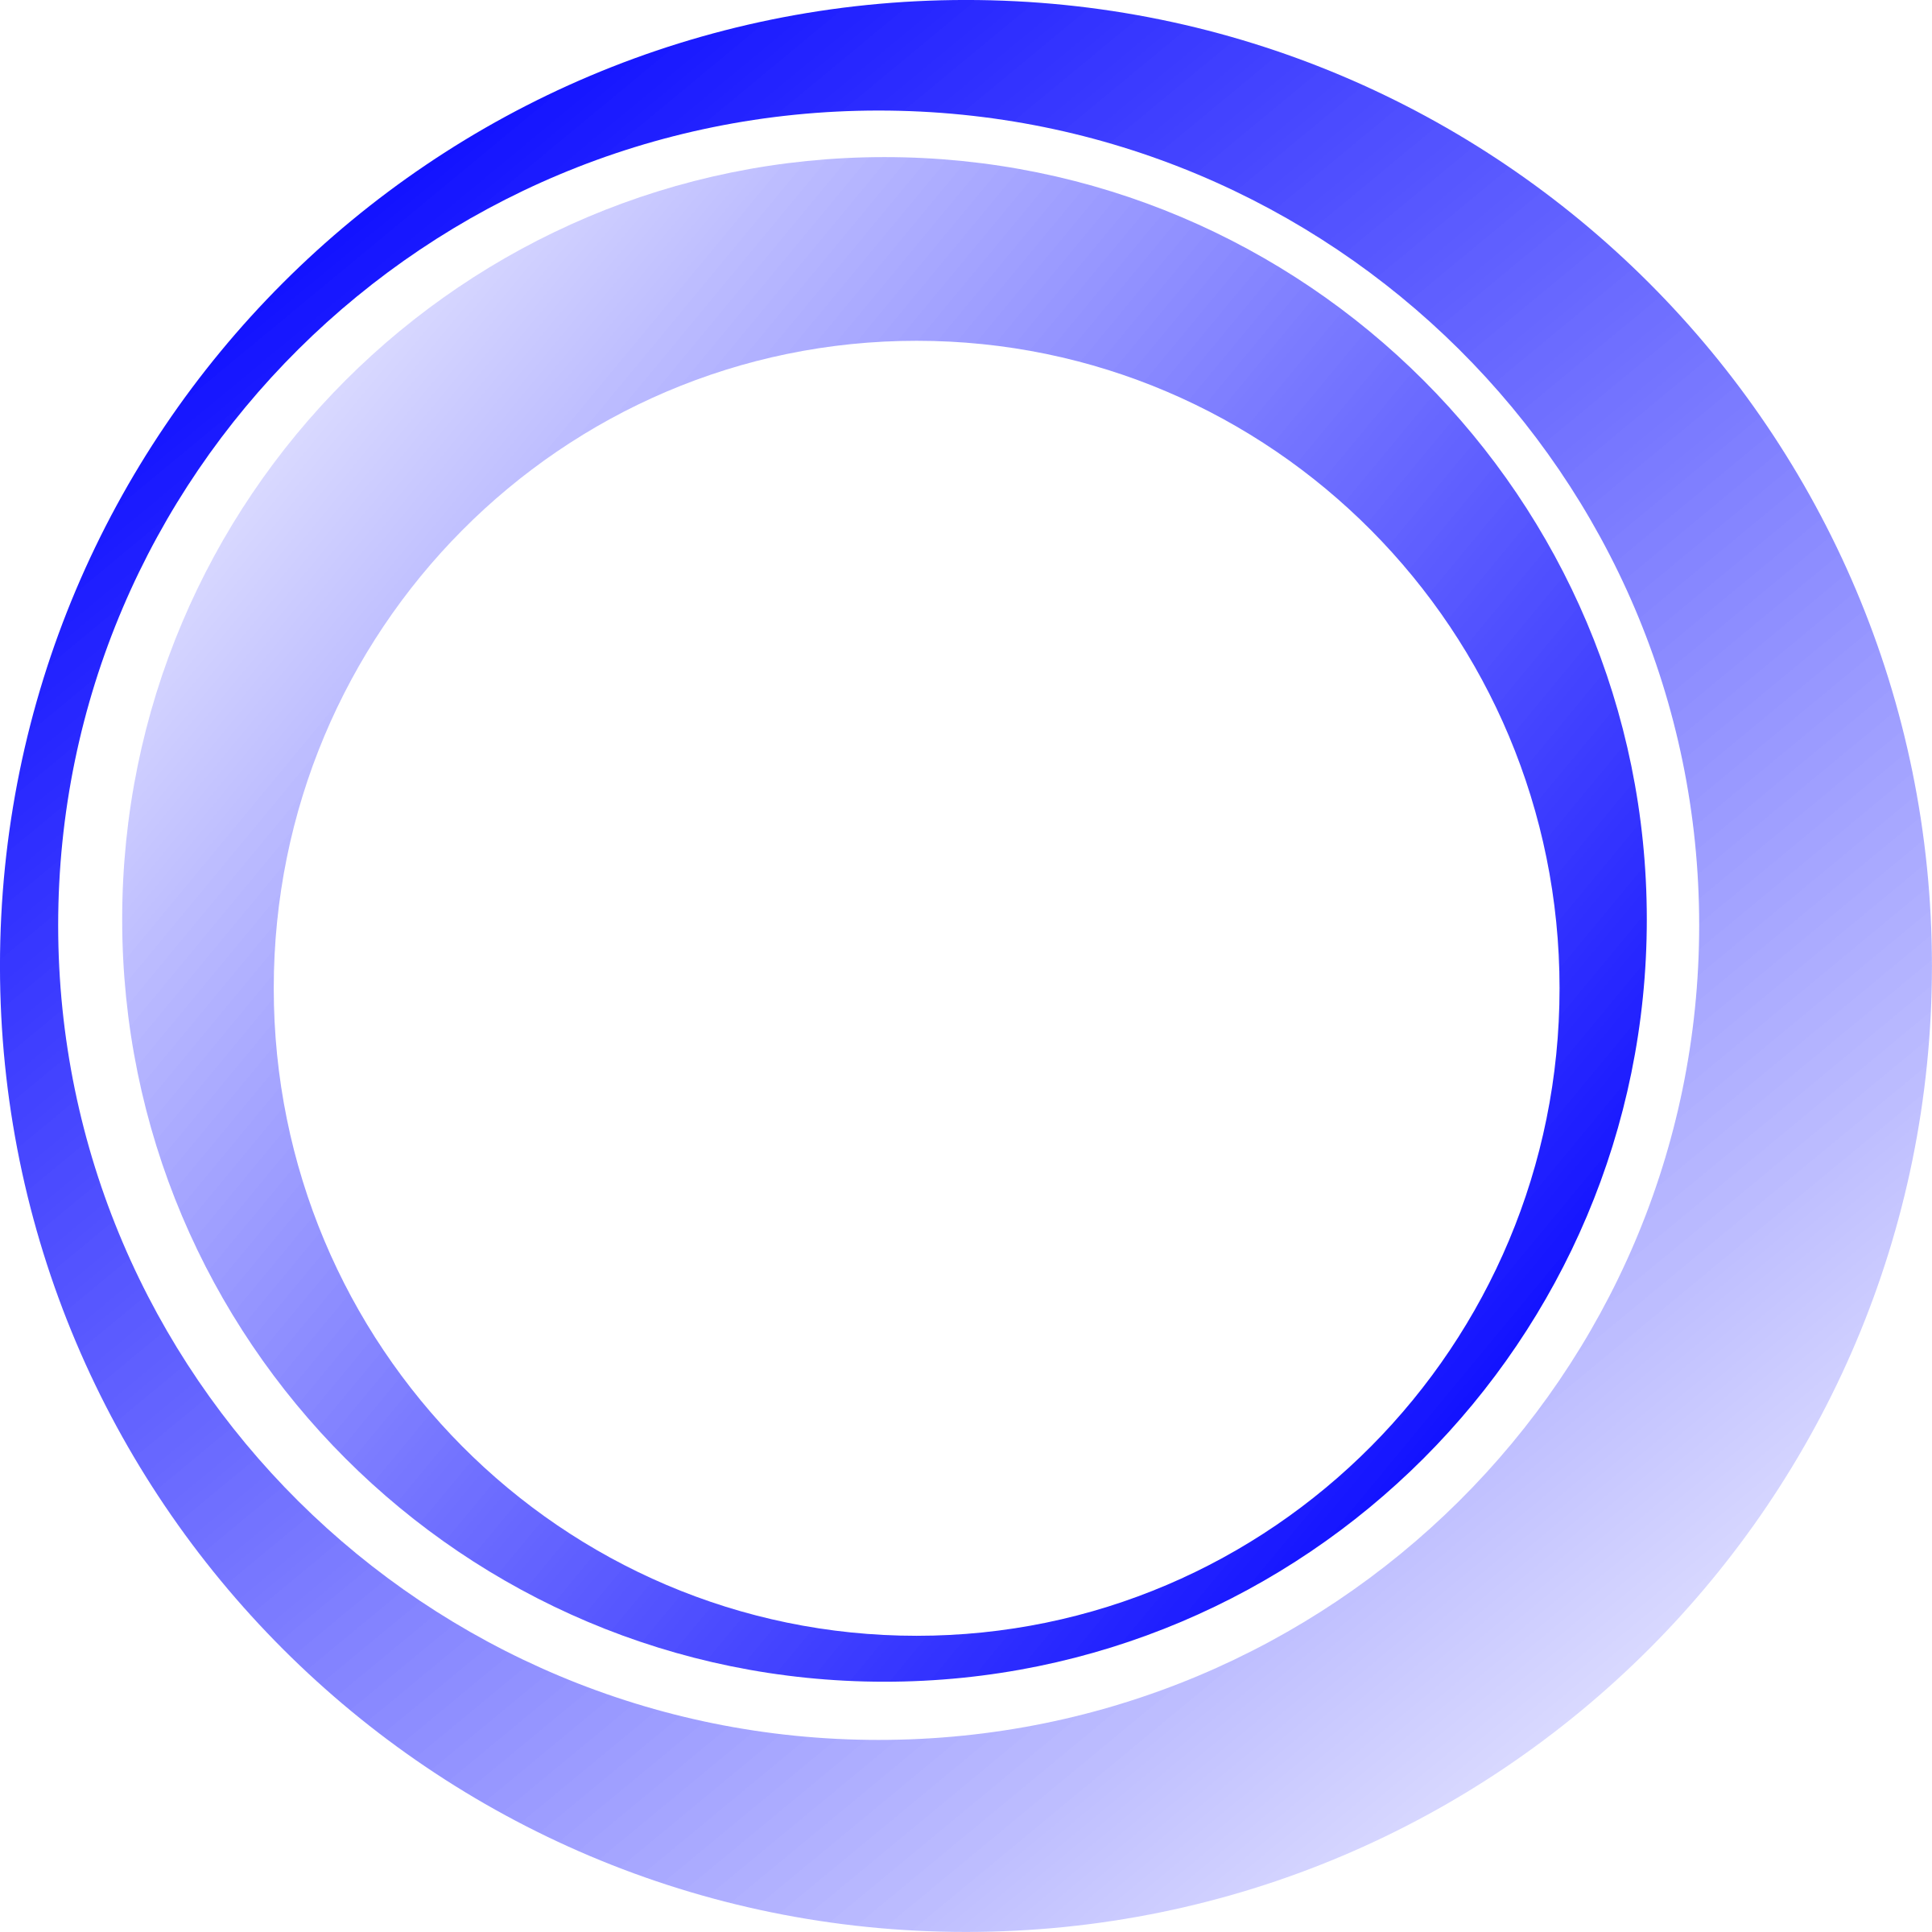 3d Blue Circle PNG Transparent Background, Free Download 44652